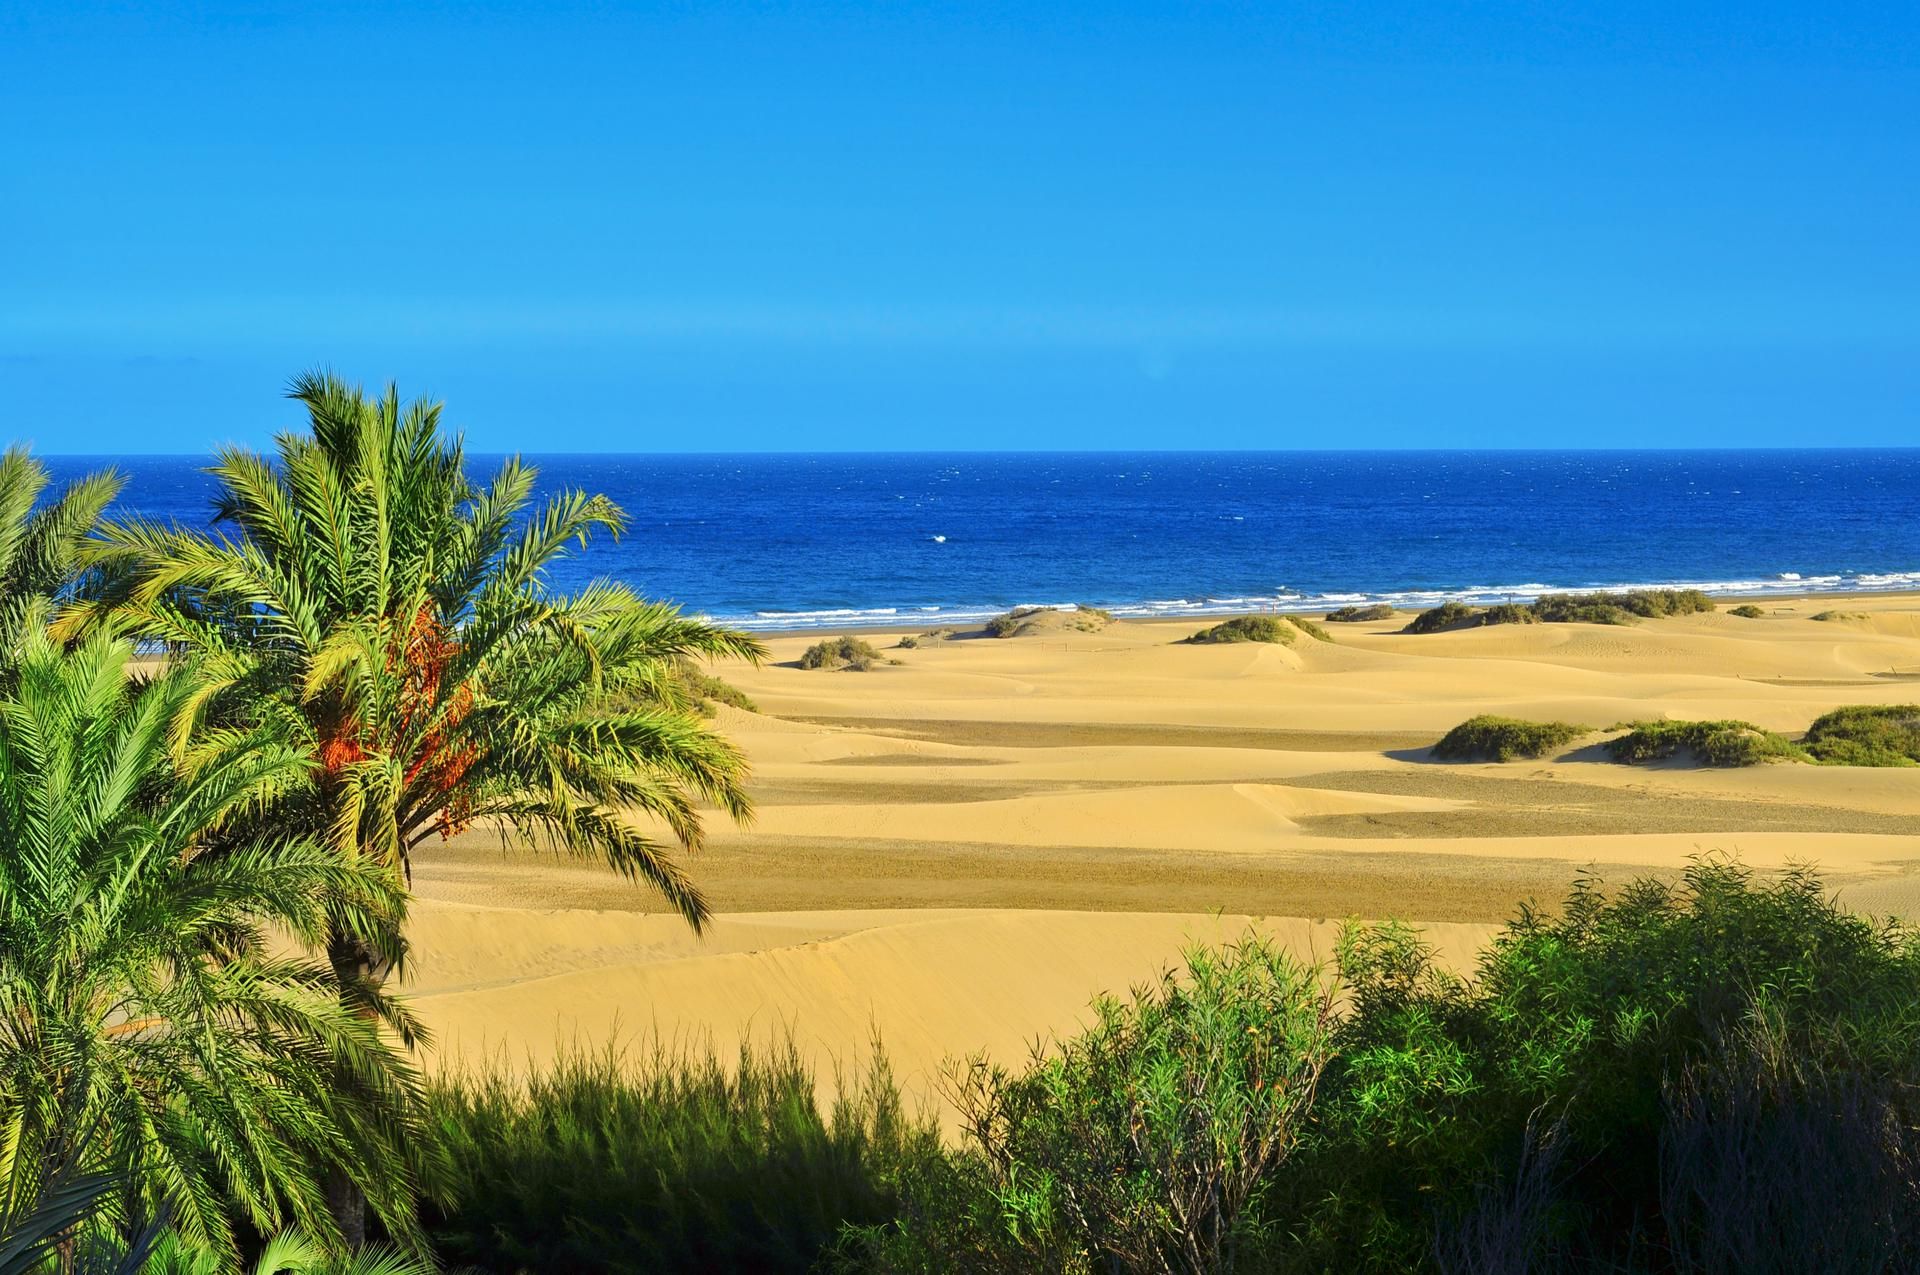 Image?url=https   Image Stock2.mercuryholidays.co.uk Resized Scenery Europe Spain Gran Canaria W1920 Maspalomas Sand Dunes &w=1920&q=80